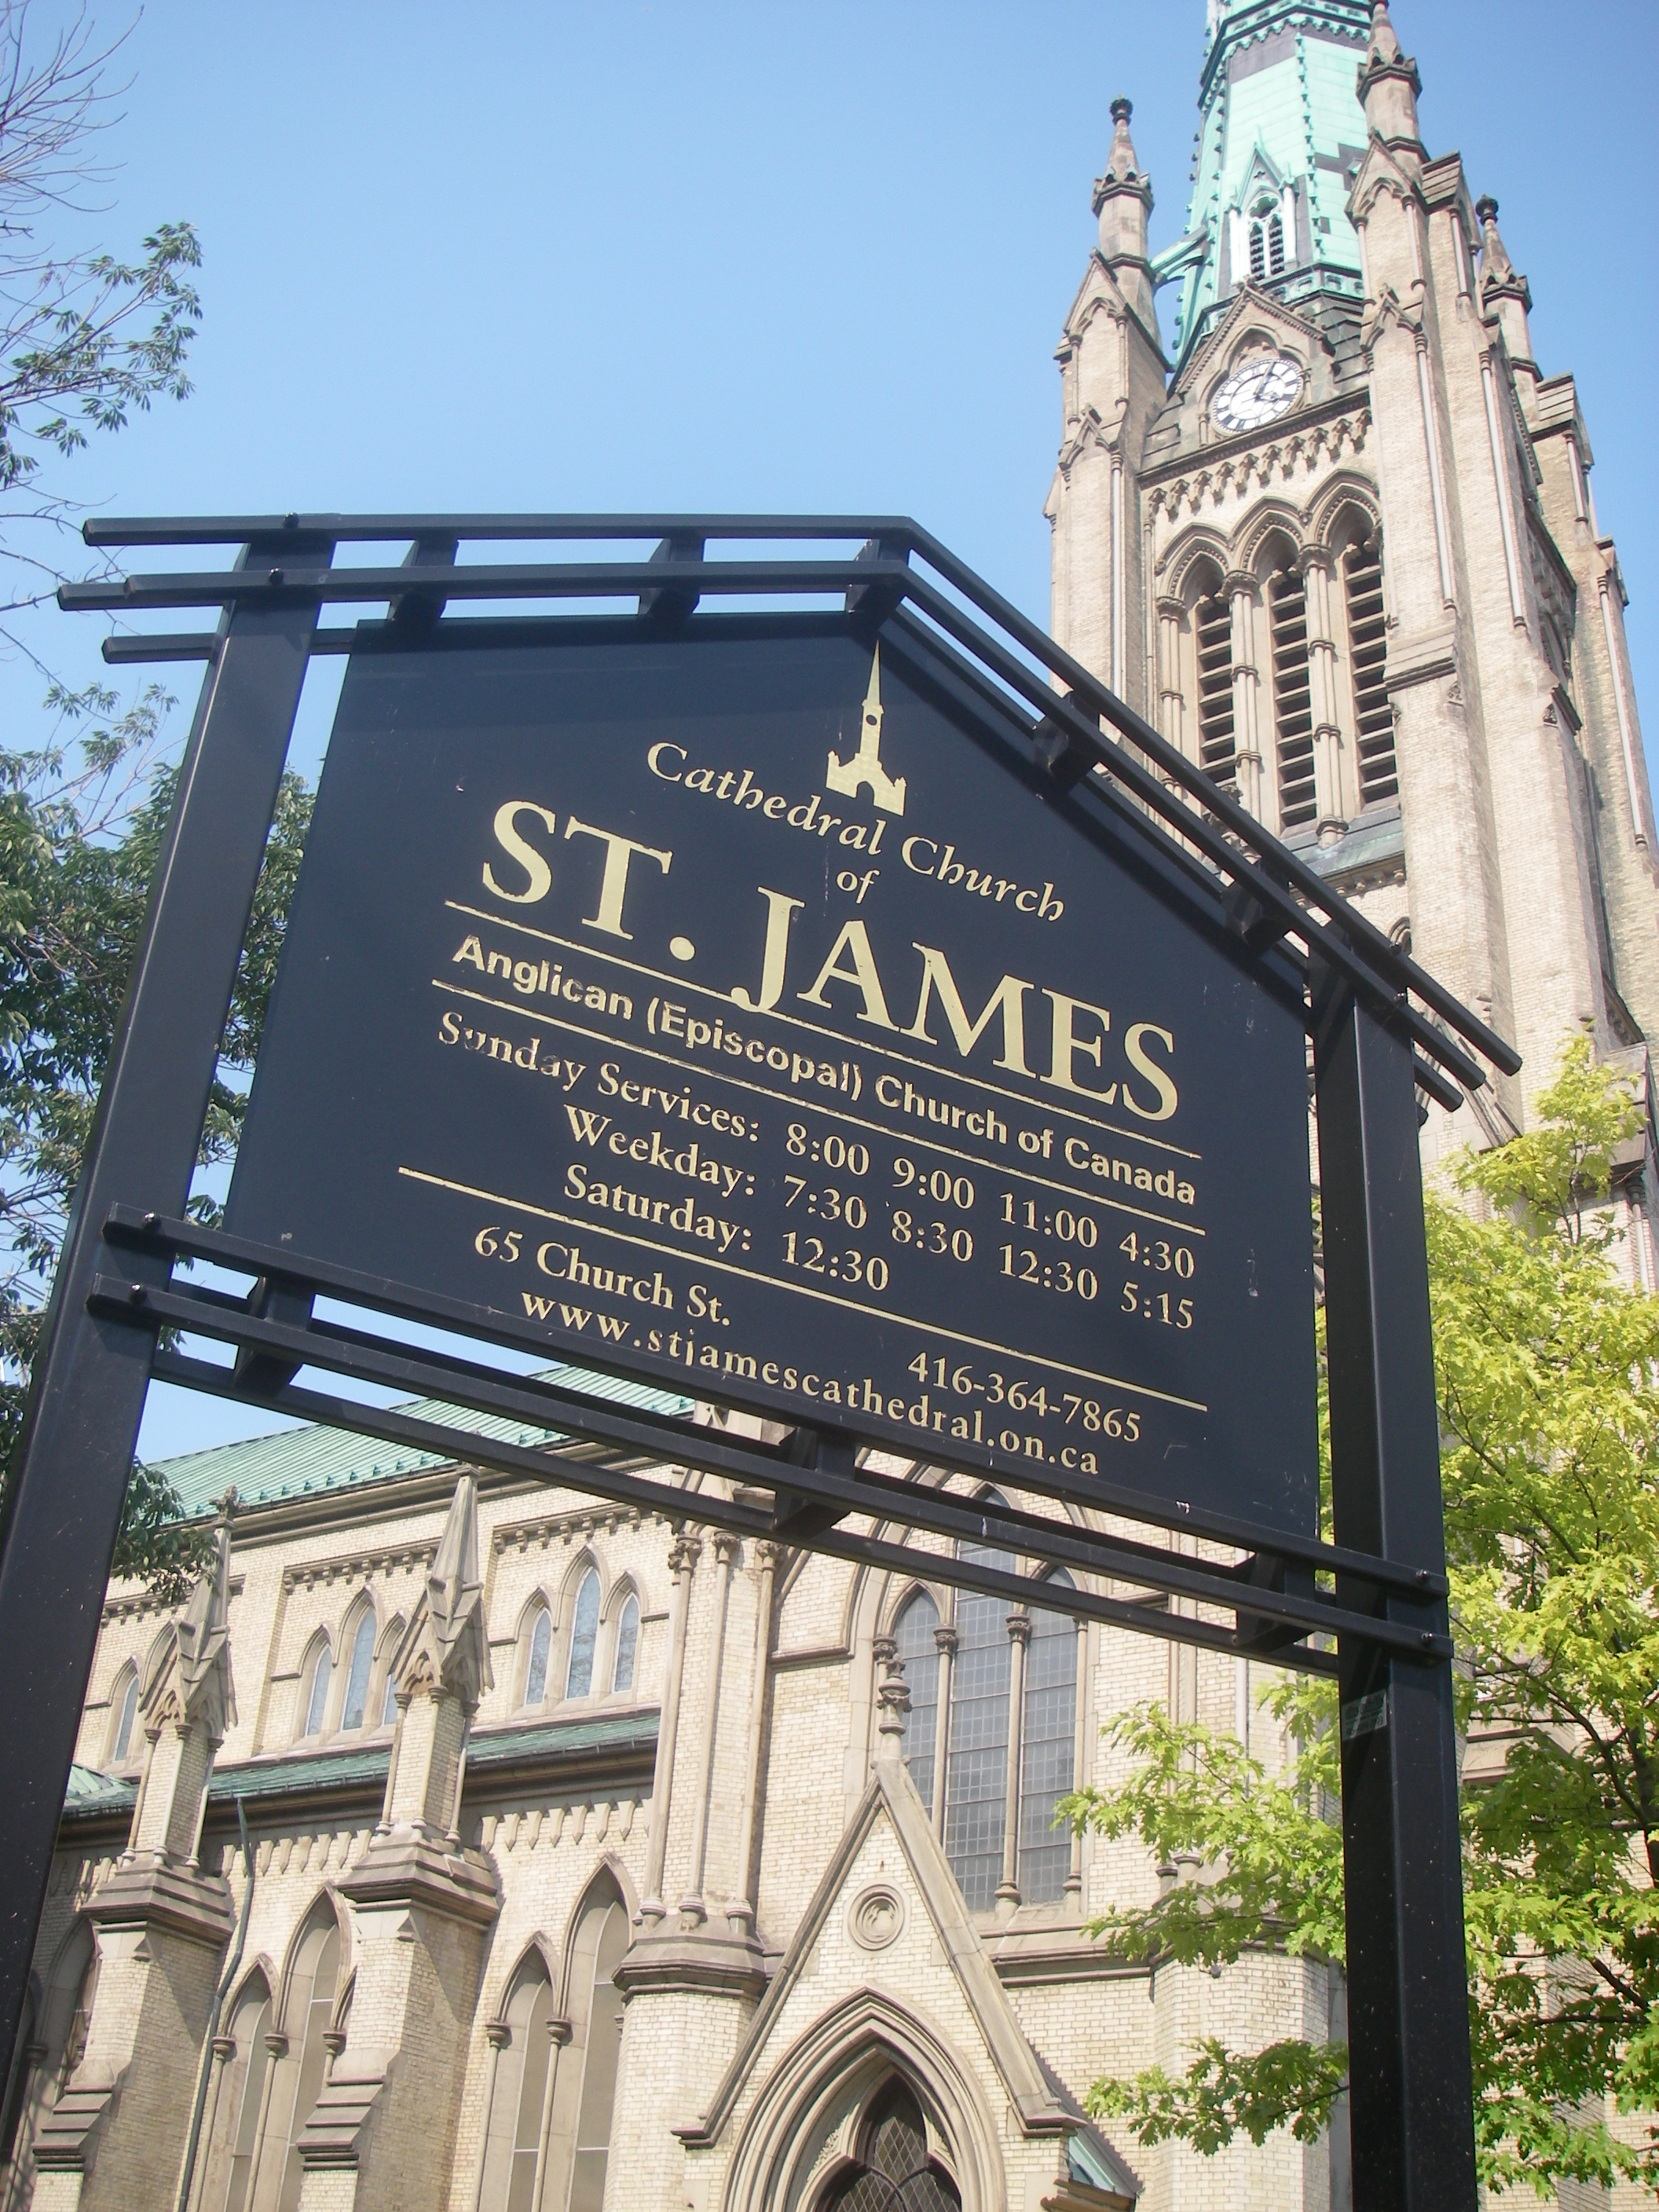 St. James c/o Wikipedia